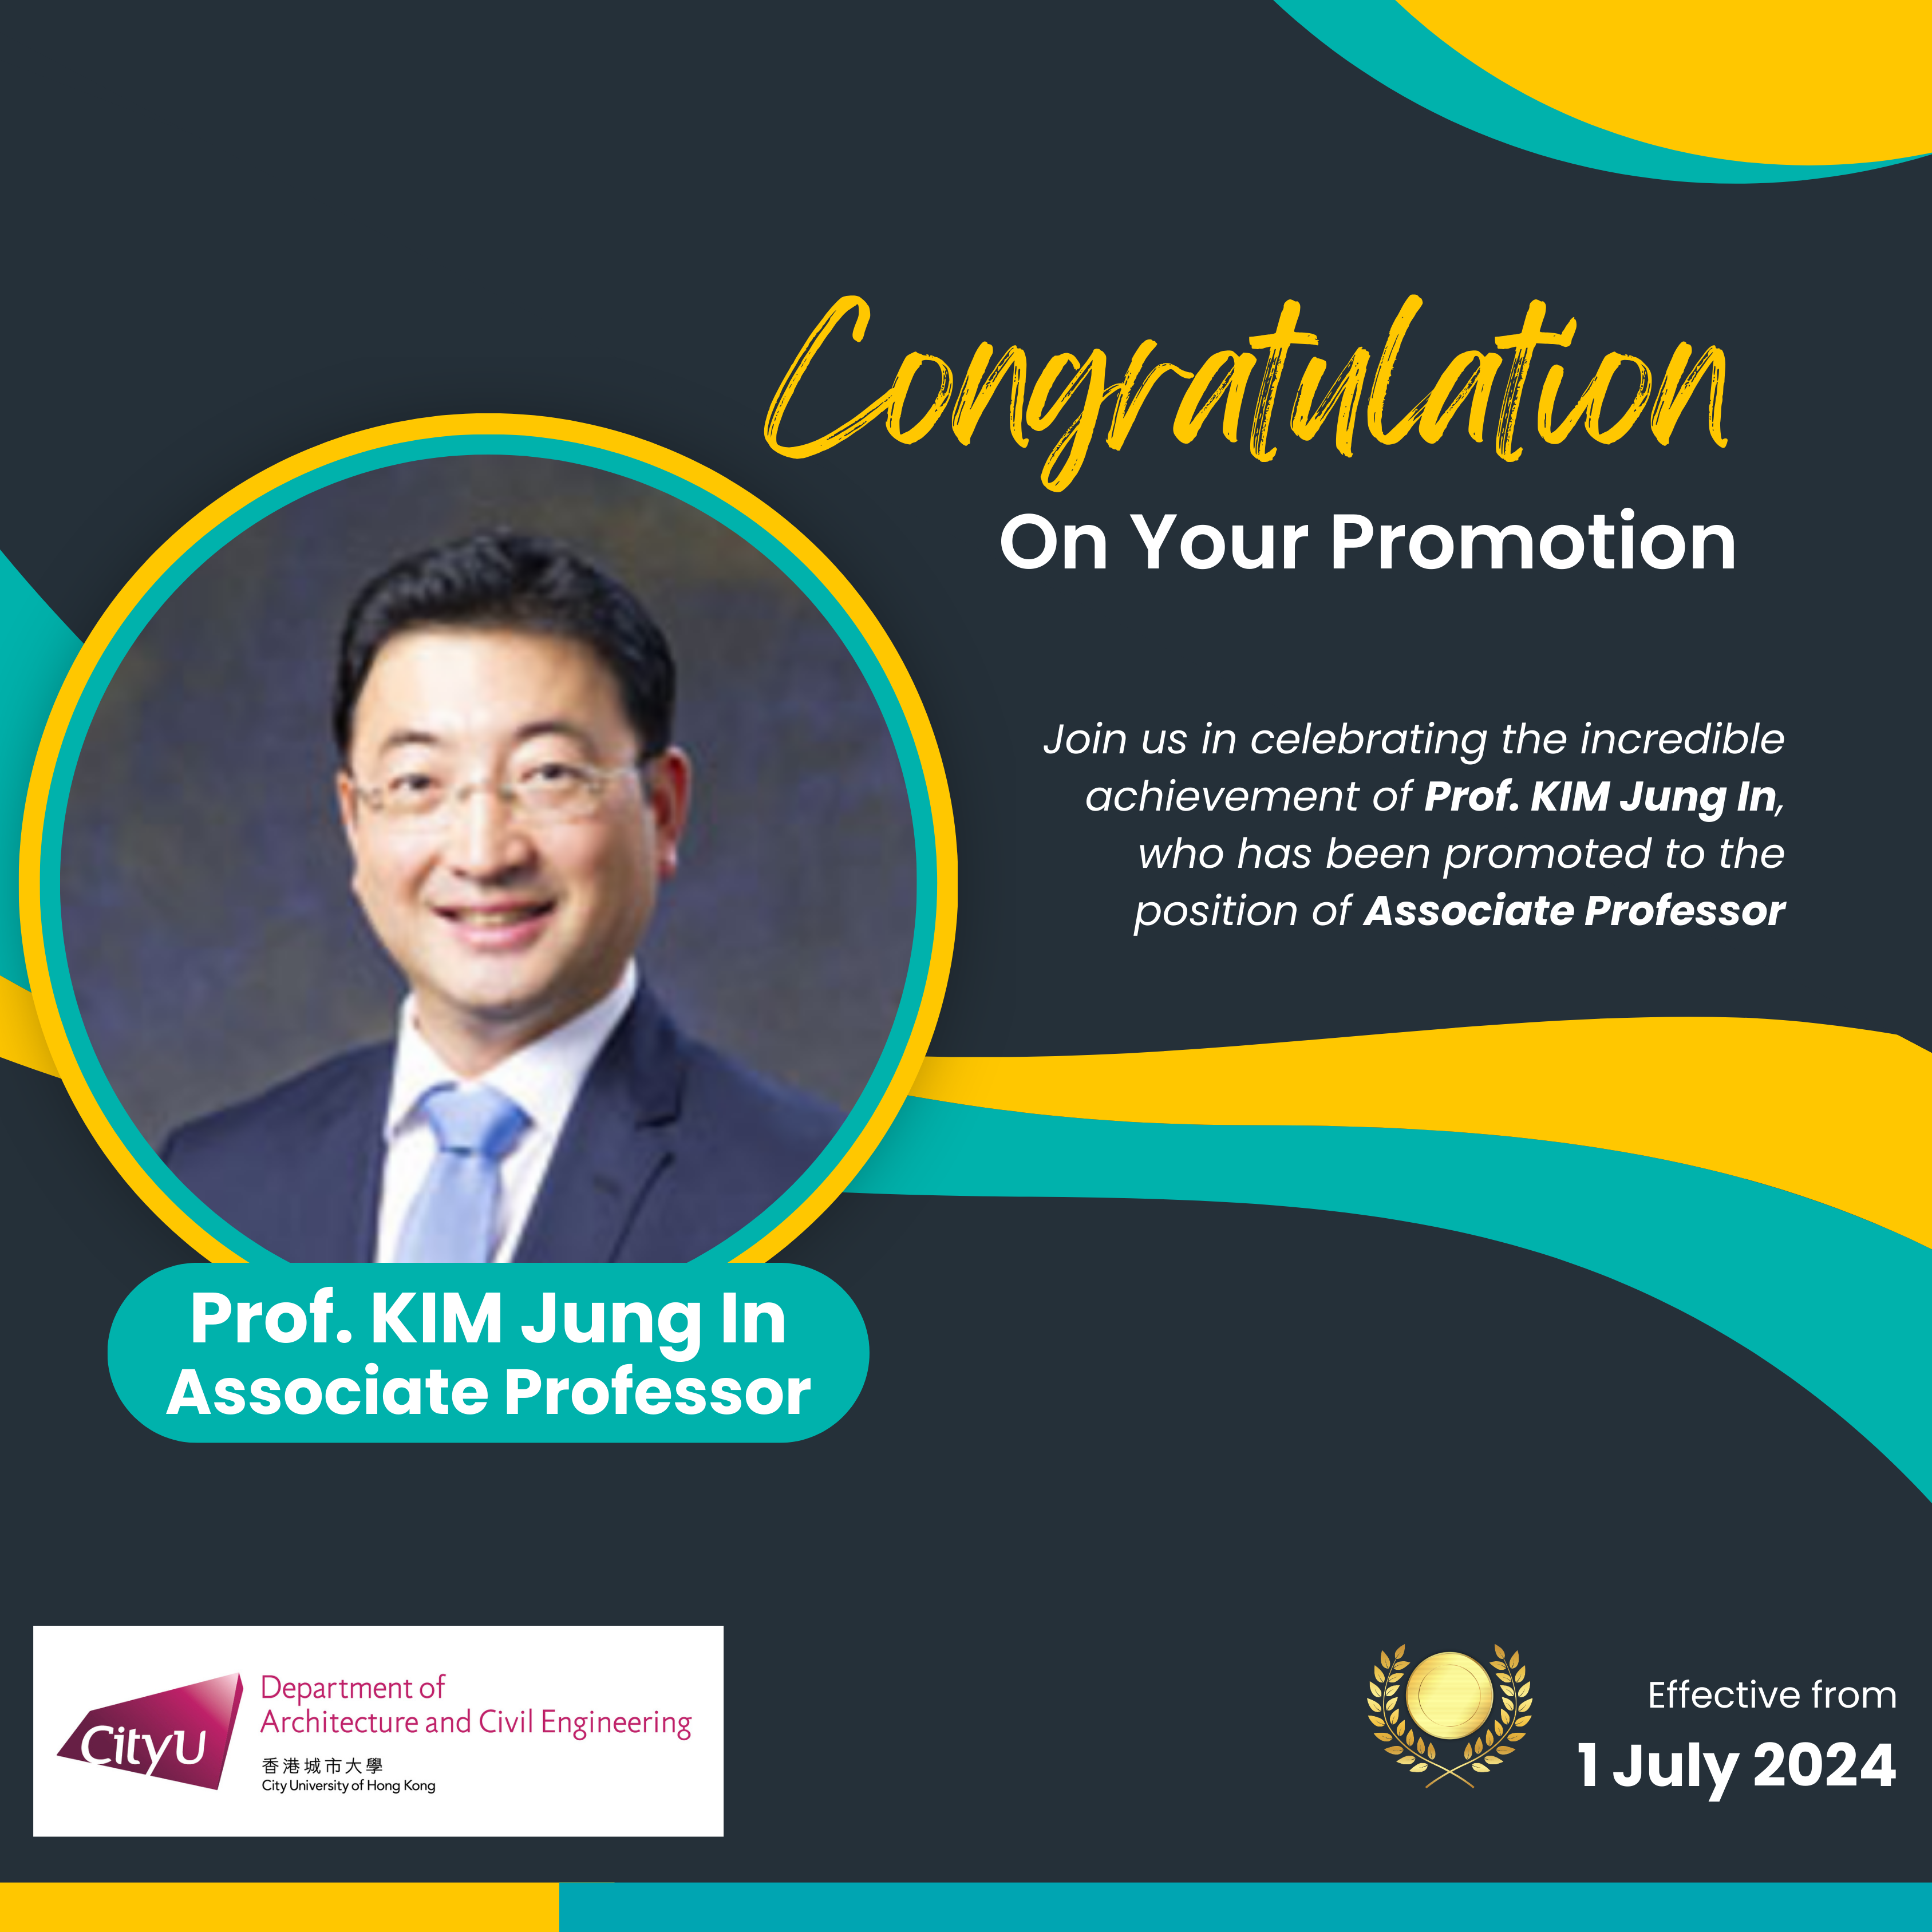 Prof. Kim's Promotion